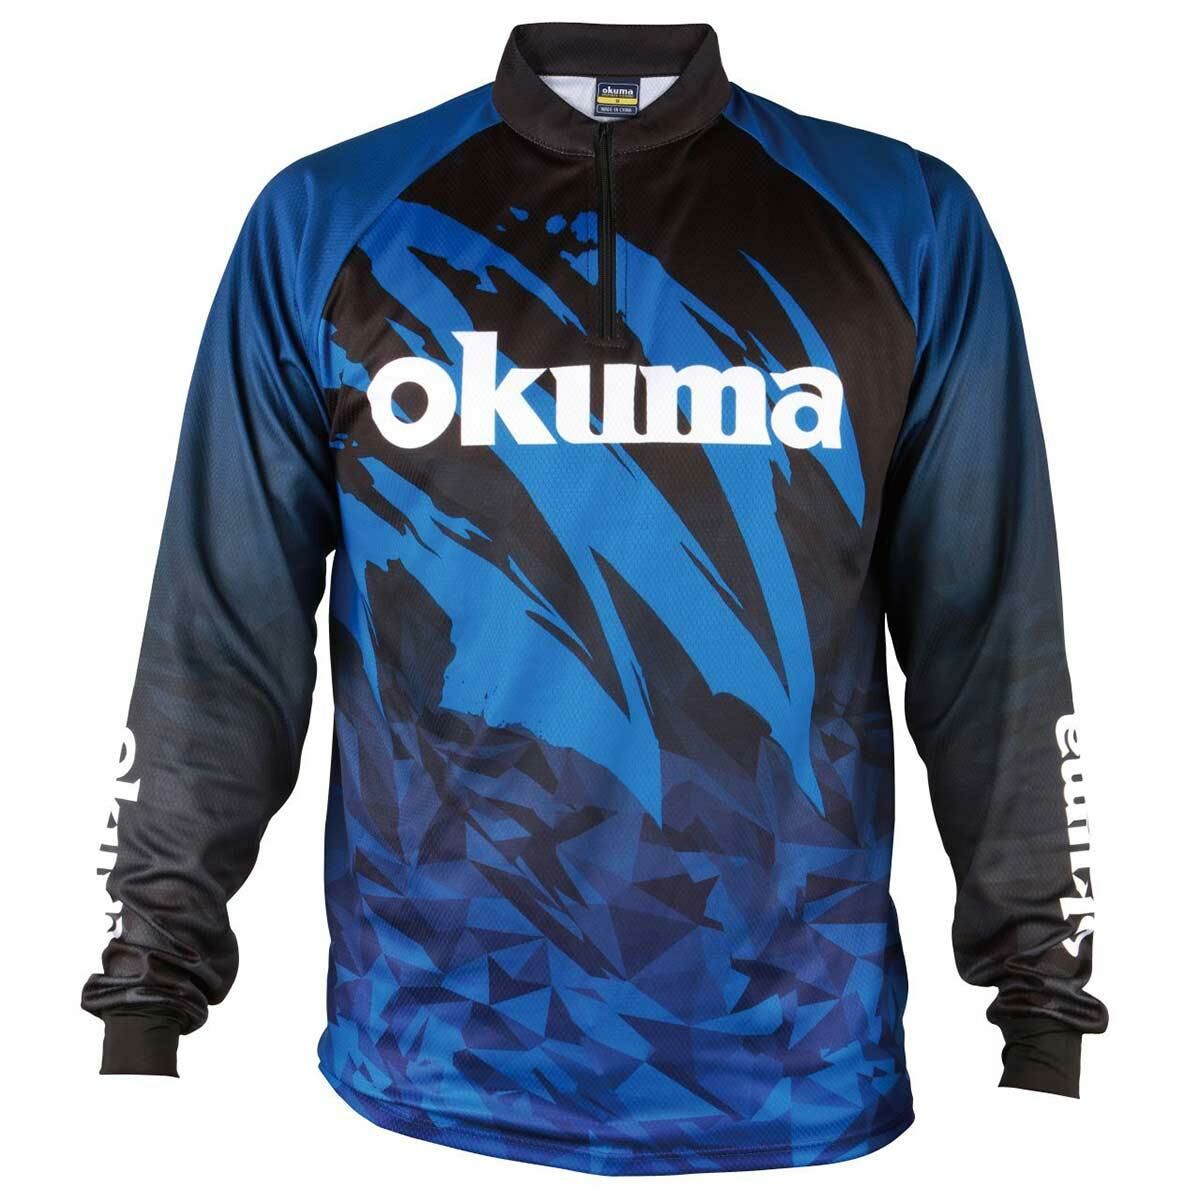 Okuma Motif Tournament jersey Shirt